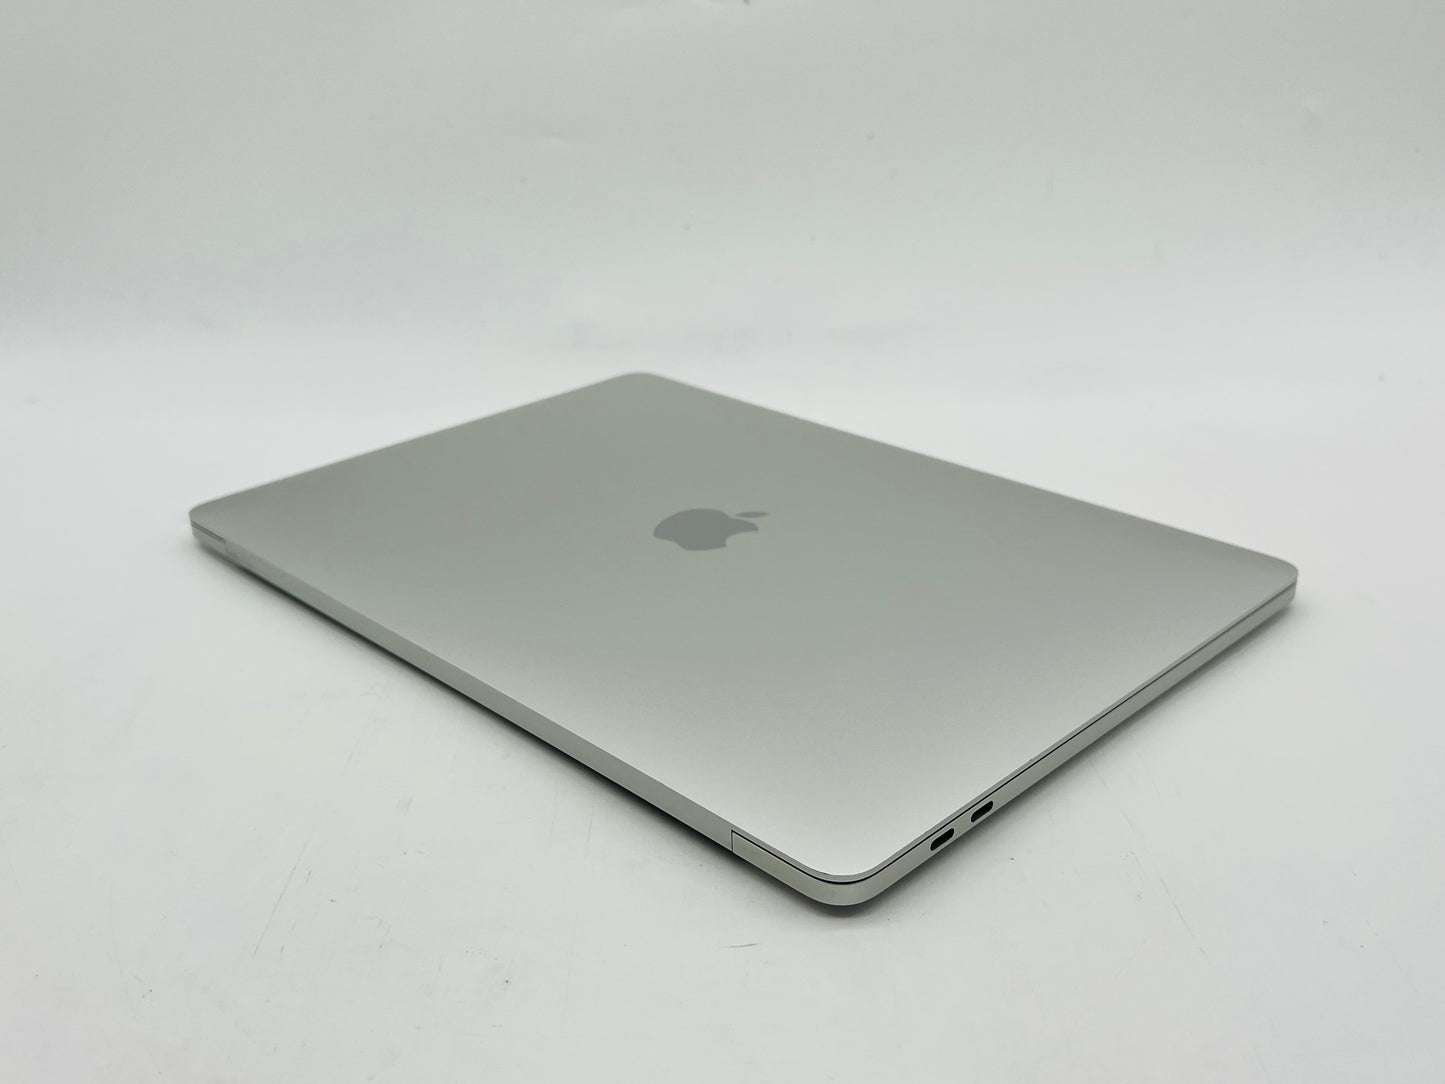 Apple 2019 MacBook Pro 13 in TB 1.4GHz Quad-Core i5 8GB RAM 256GB SSD IIPG645